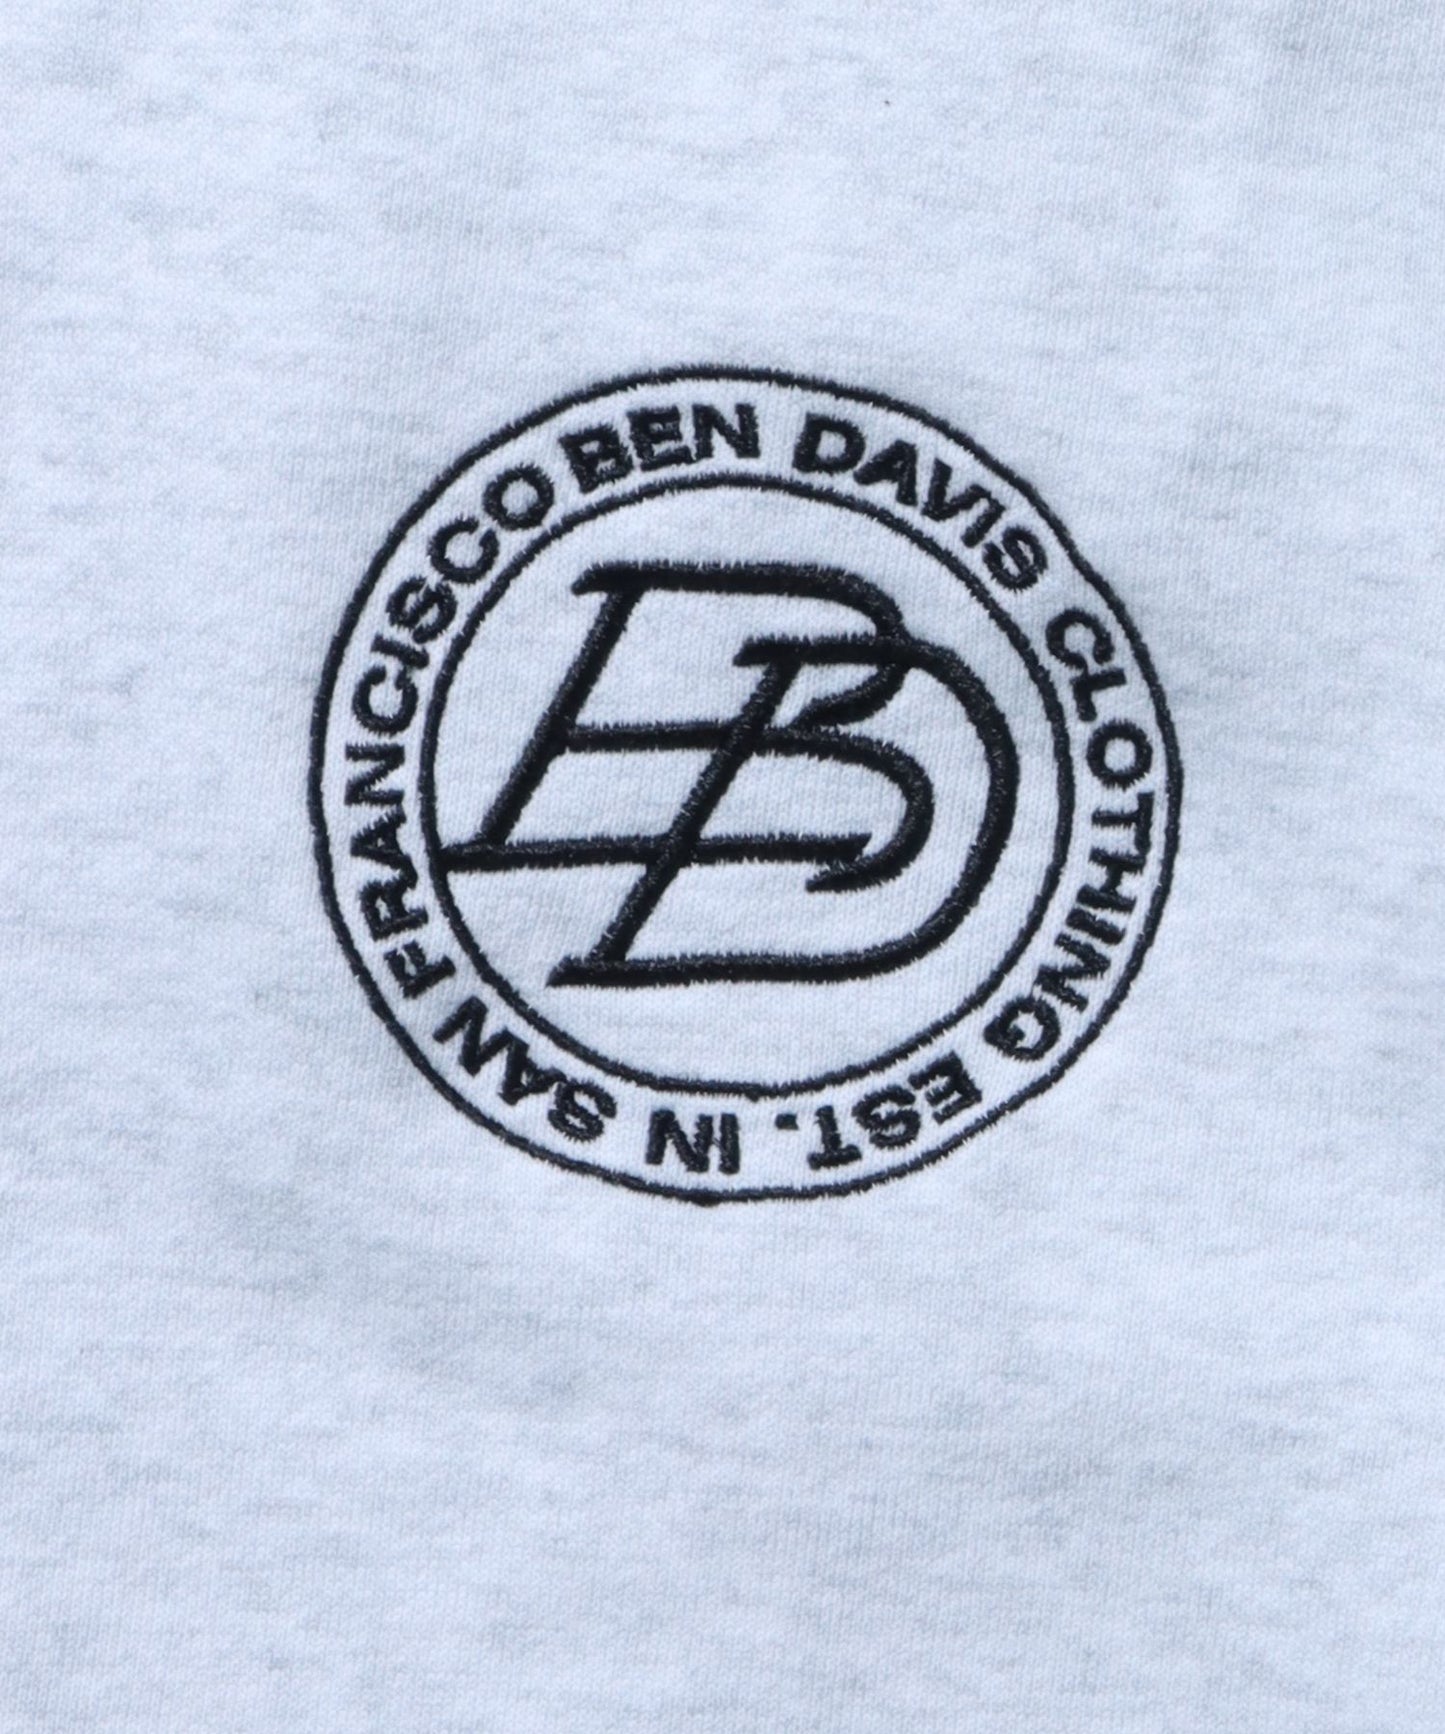 【BEN DAVIS(ベンデイビス)】 RELAXED SWEAT PANTS / スウェット ルーズ ストリート 刺繍 サークル ロゴ パンツ オフホワイト